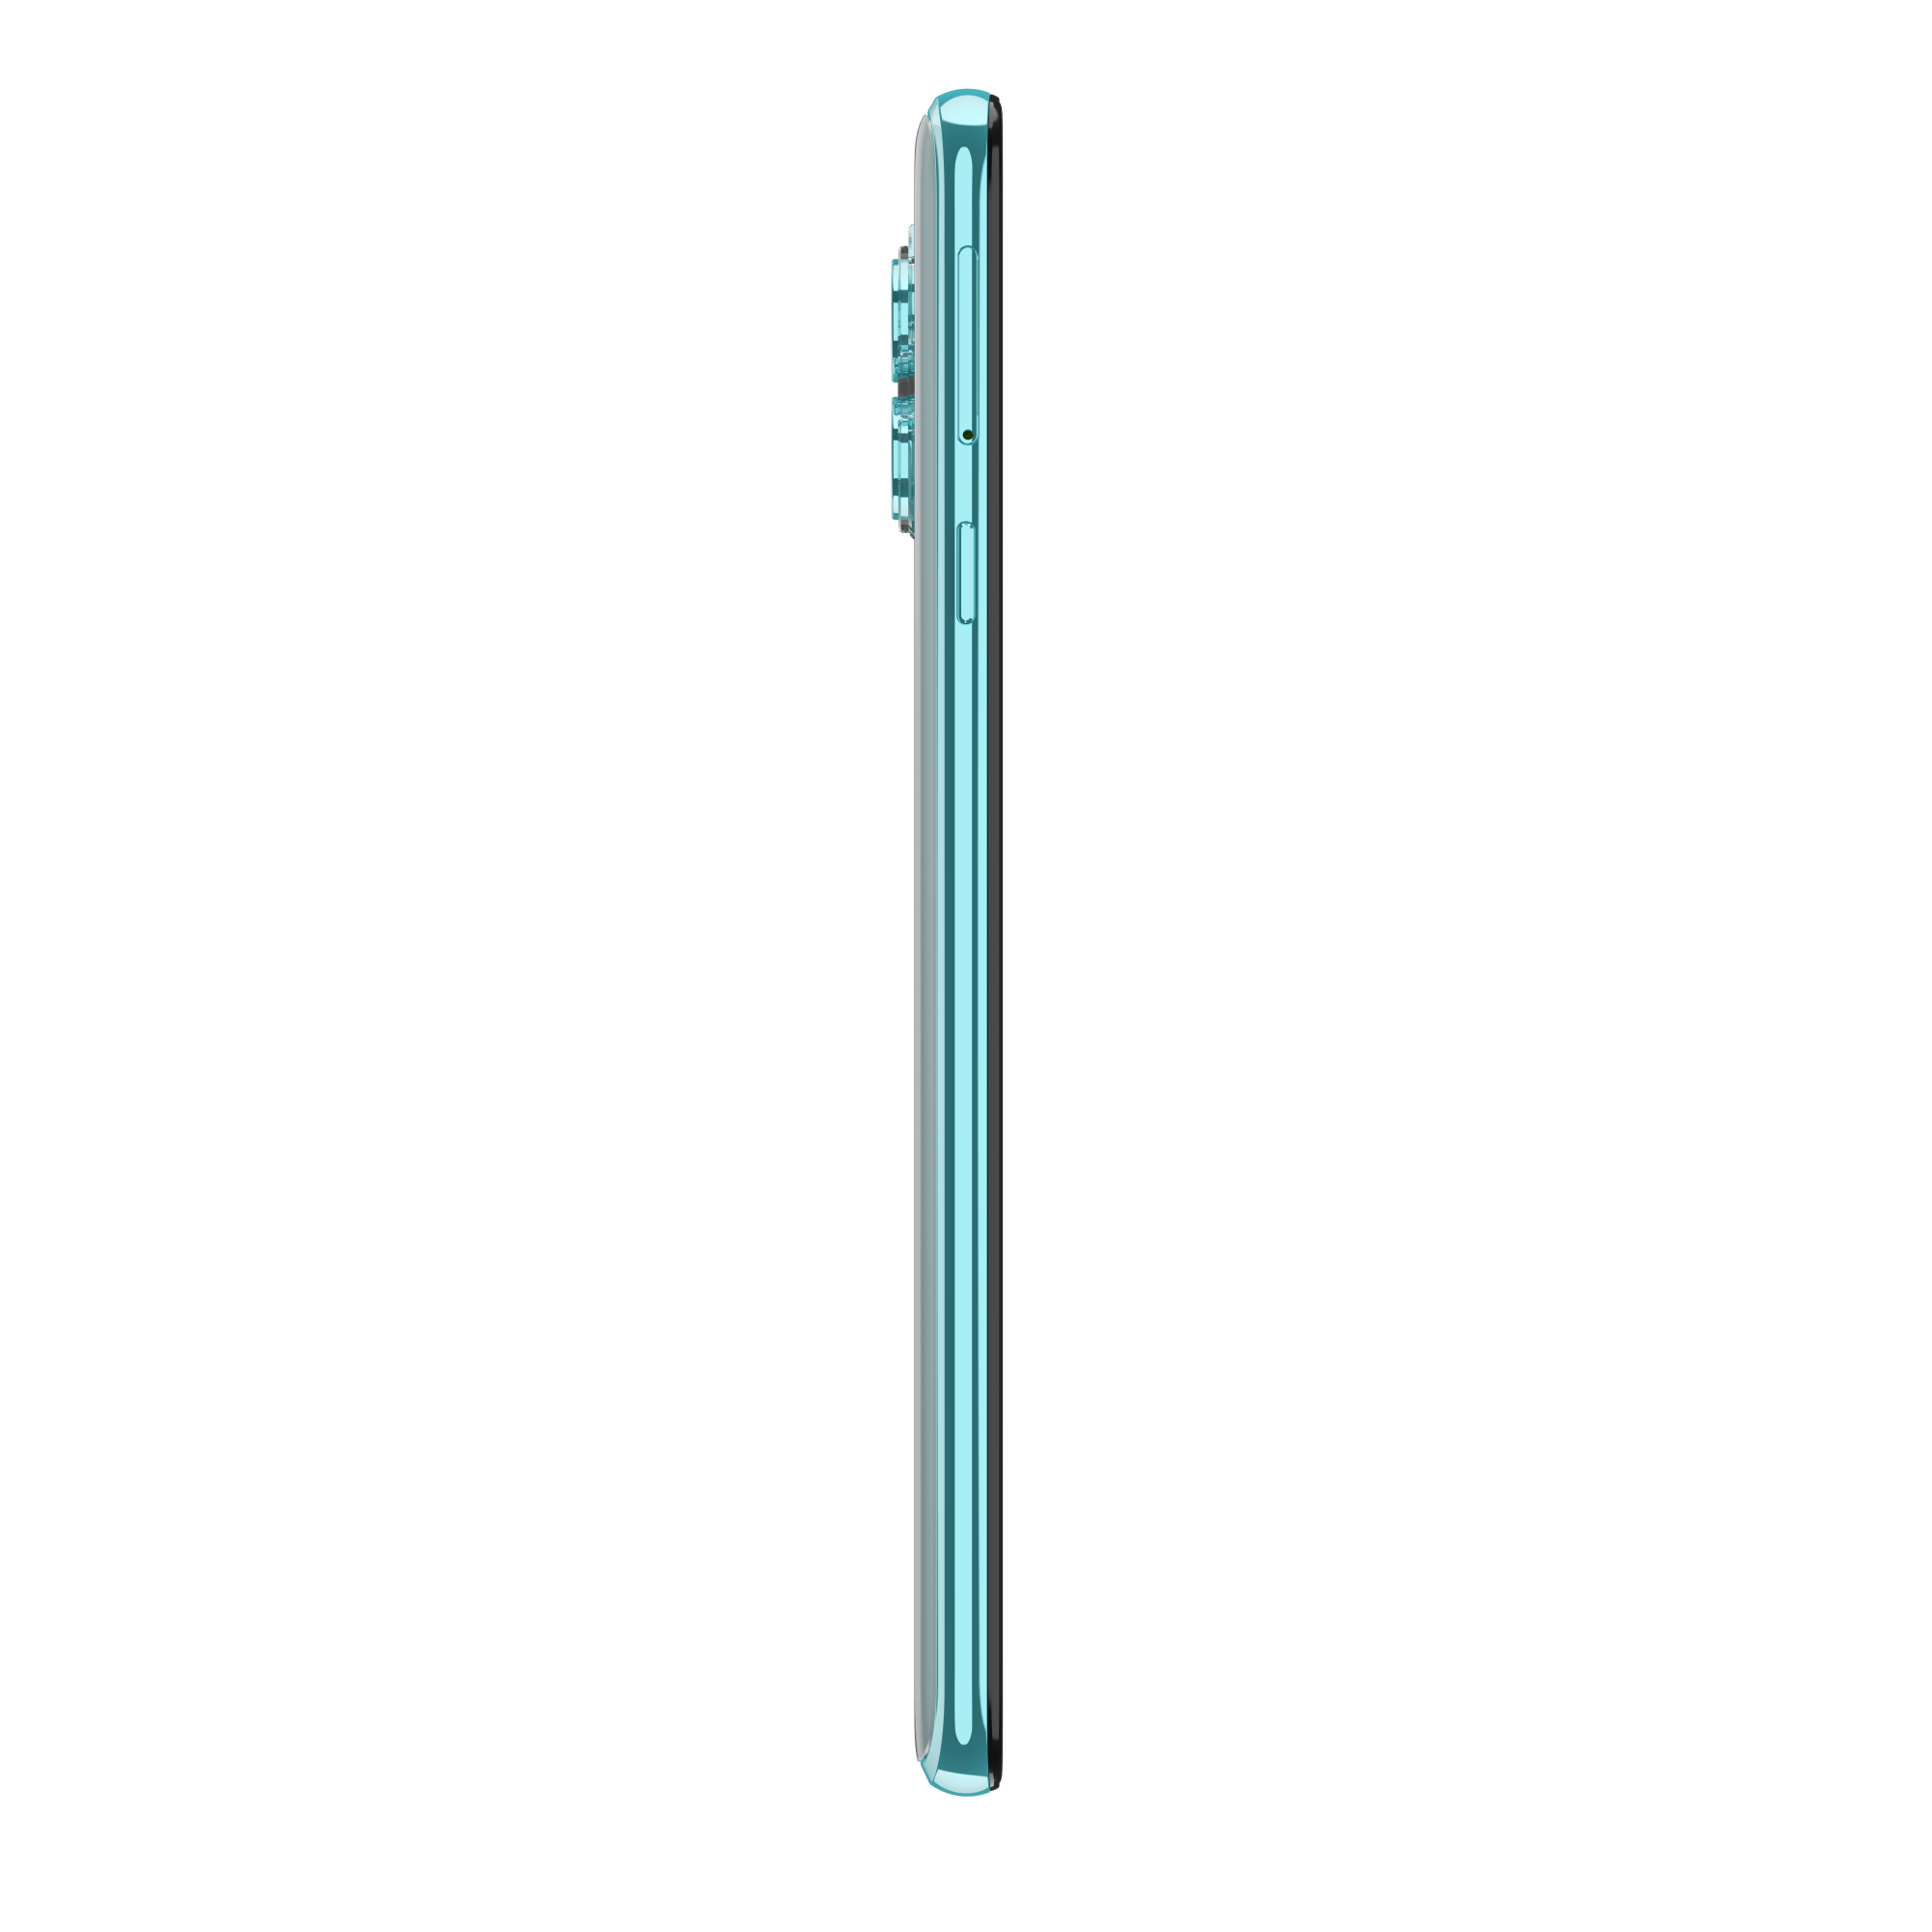 Motorola Edge 20 Lite 5G Gris Telcel R9